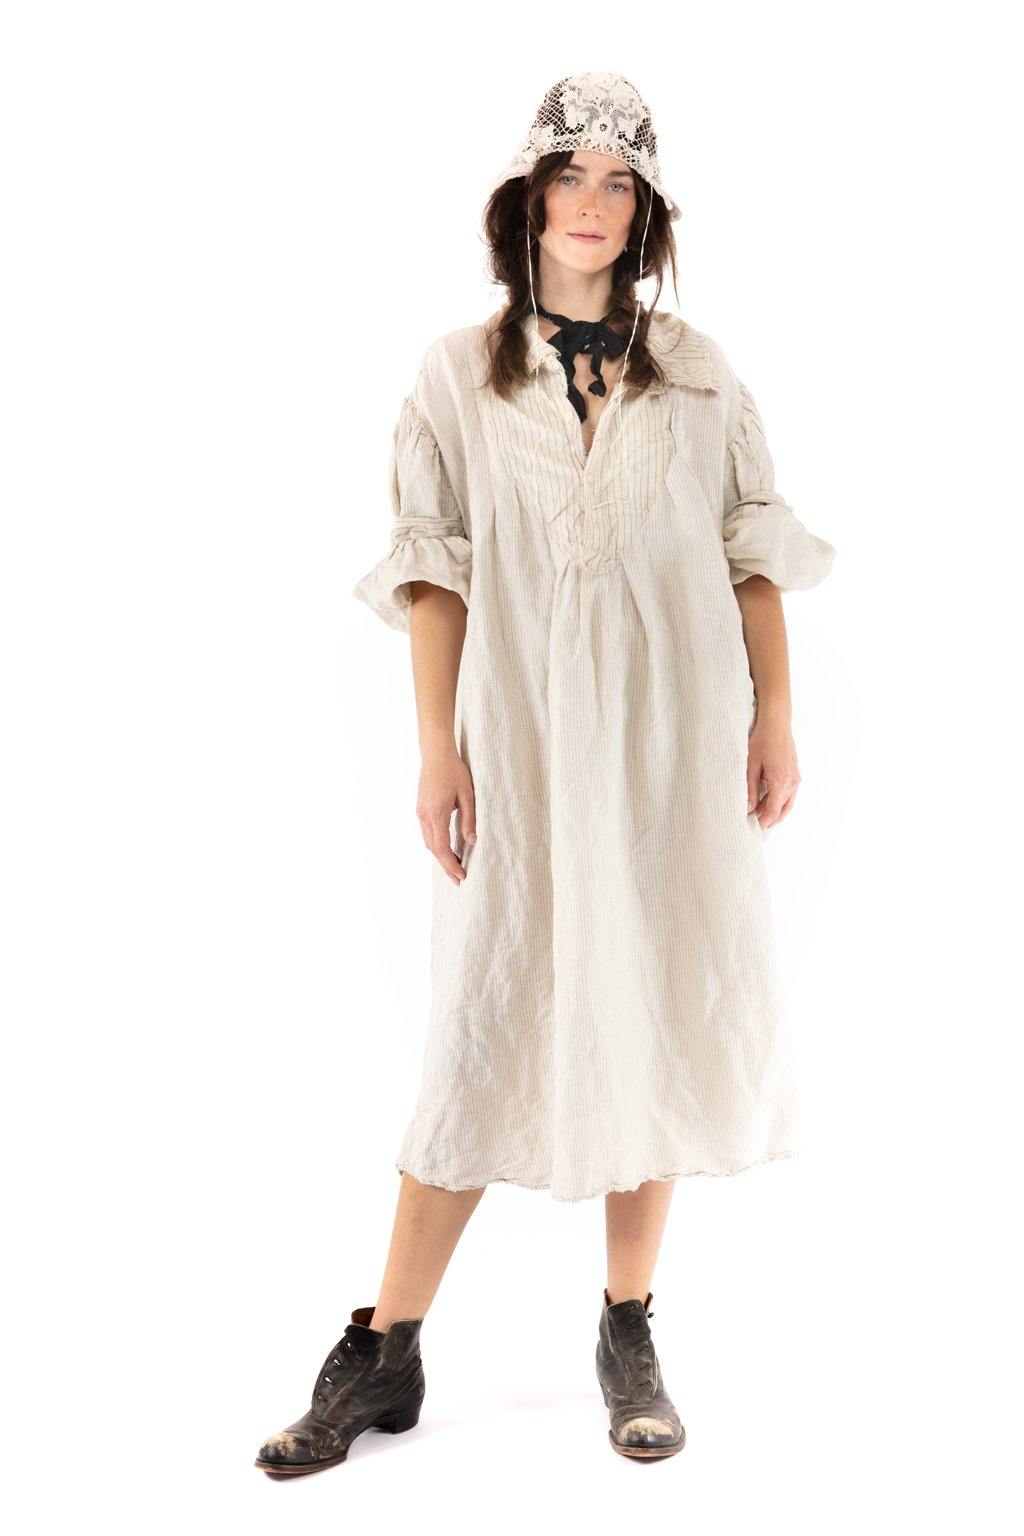 Tora Shirt Dress - Magnolia Pearl Clothing